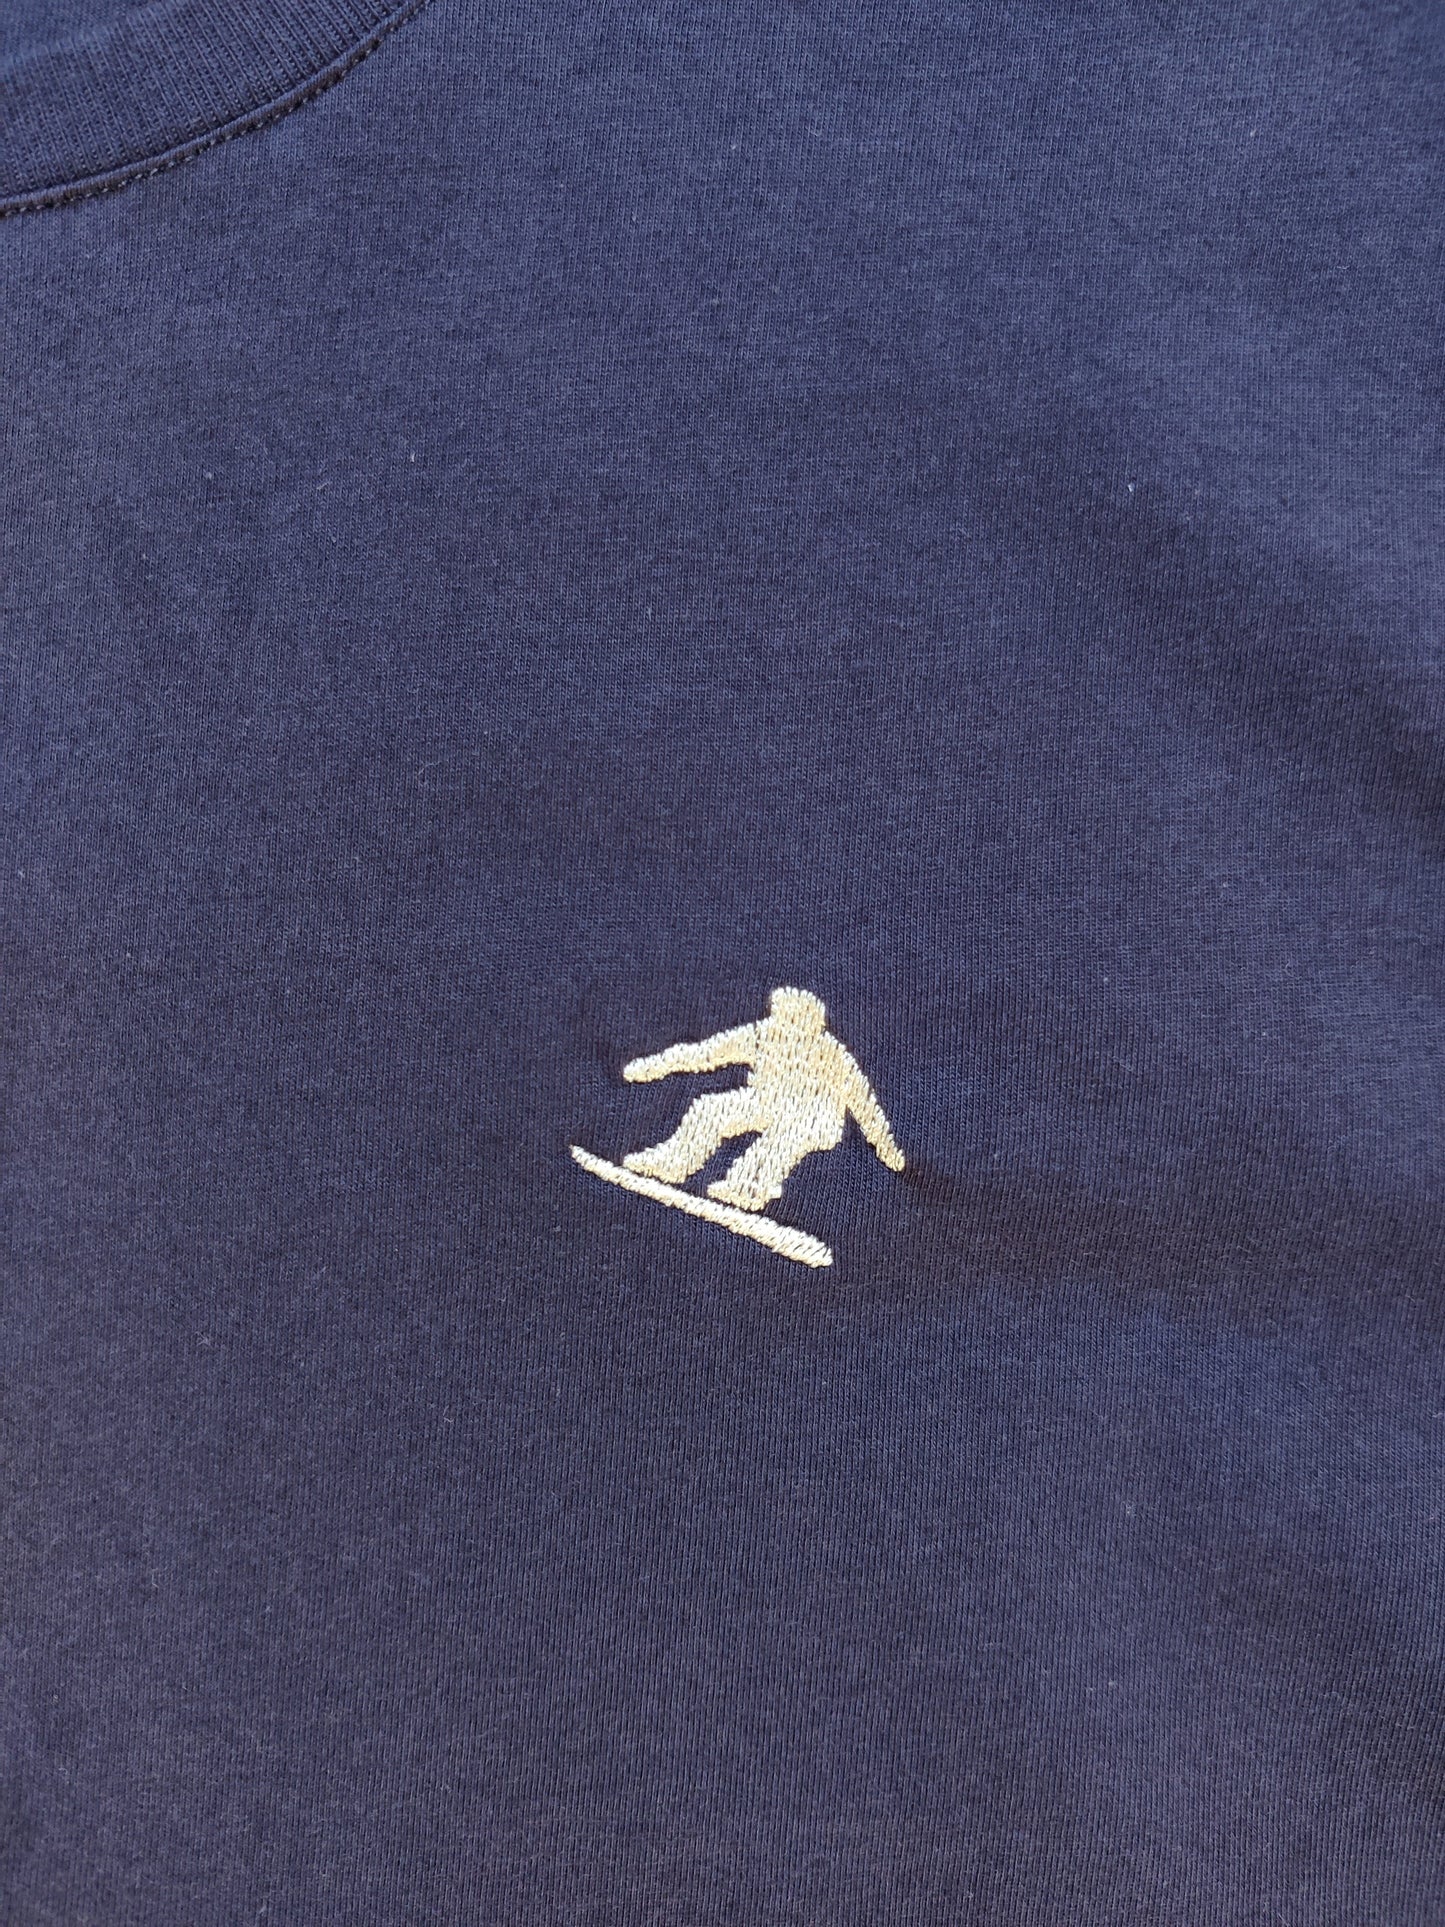 Snowboarder T-shirt